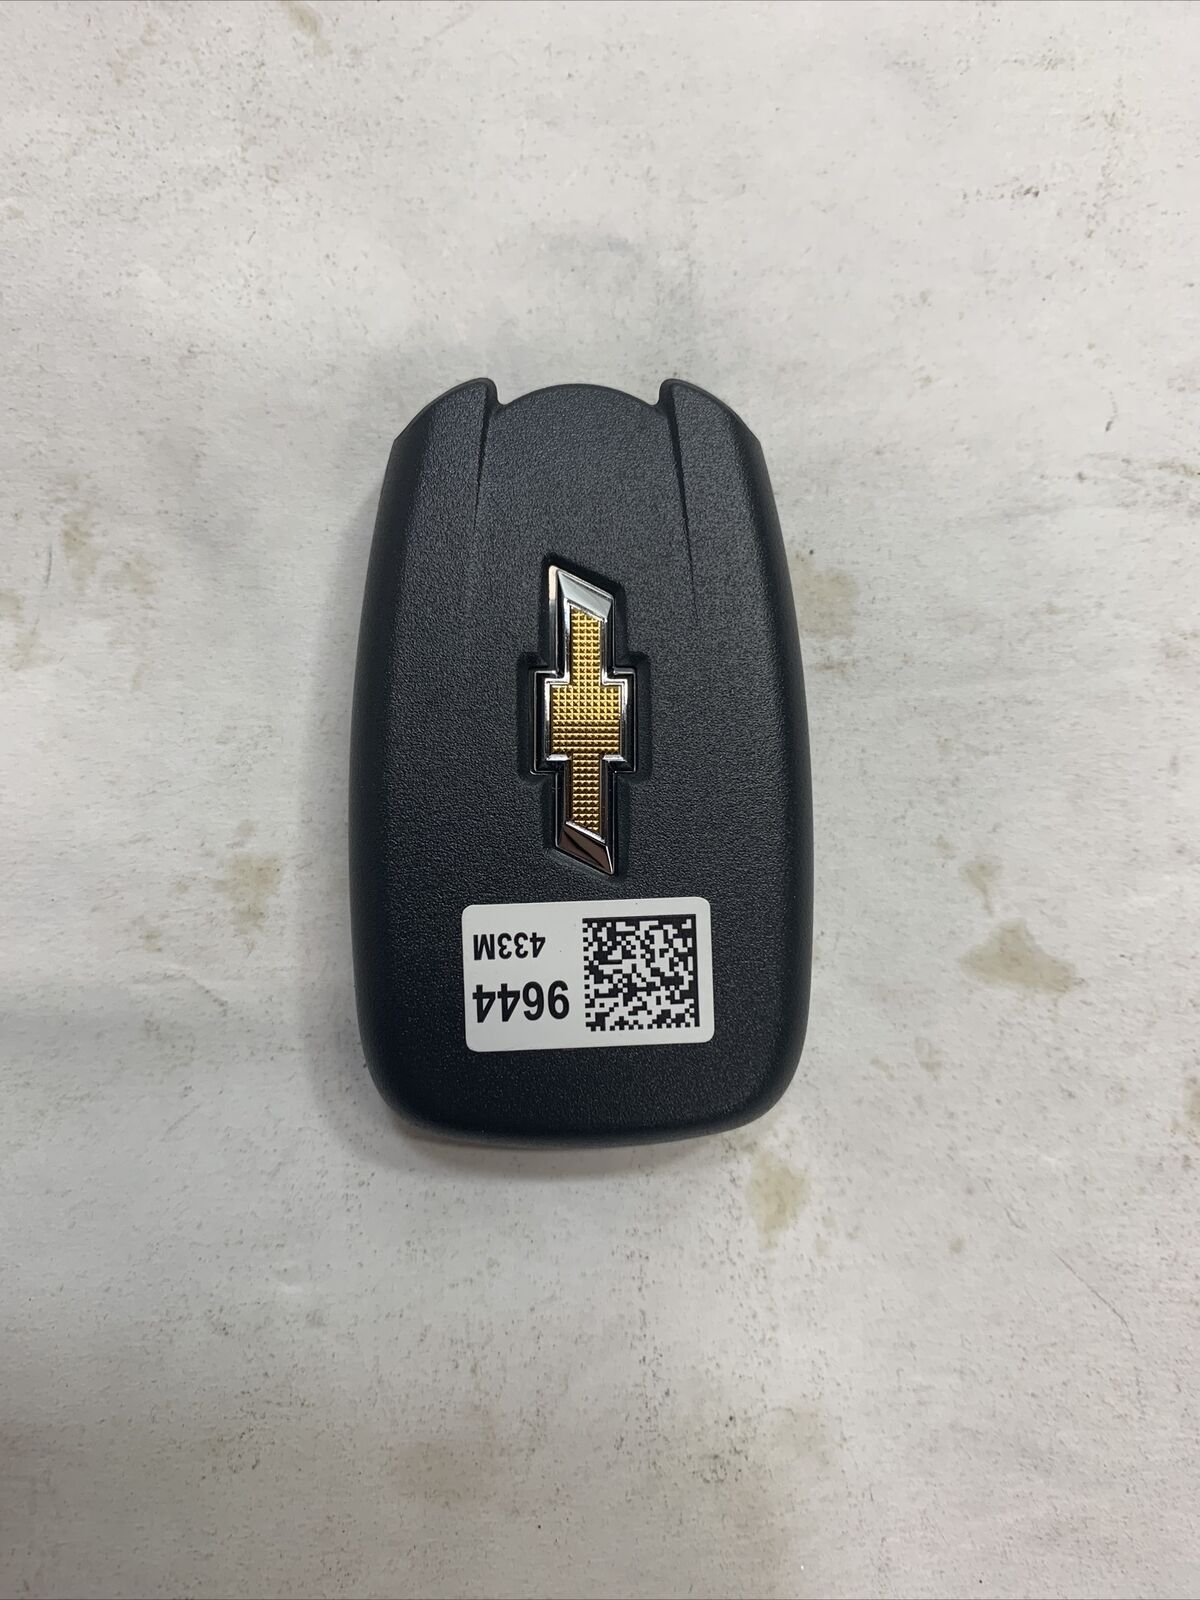 New OEM Genuine GM Key FOB F (S)Transmitter 13529644